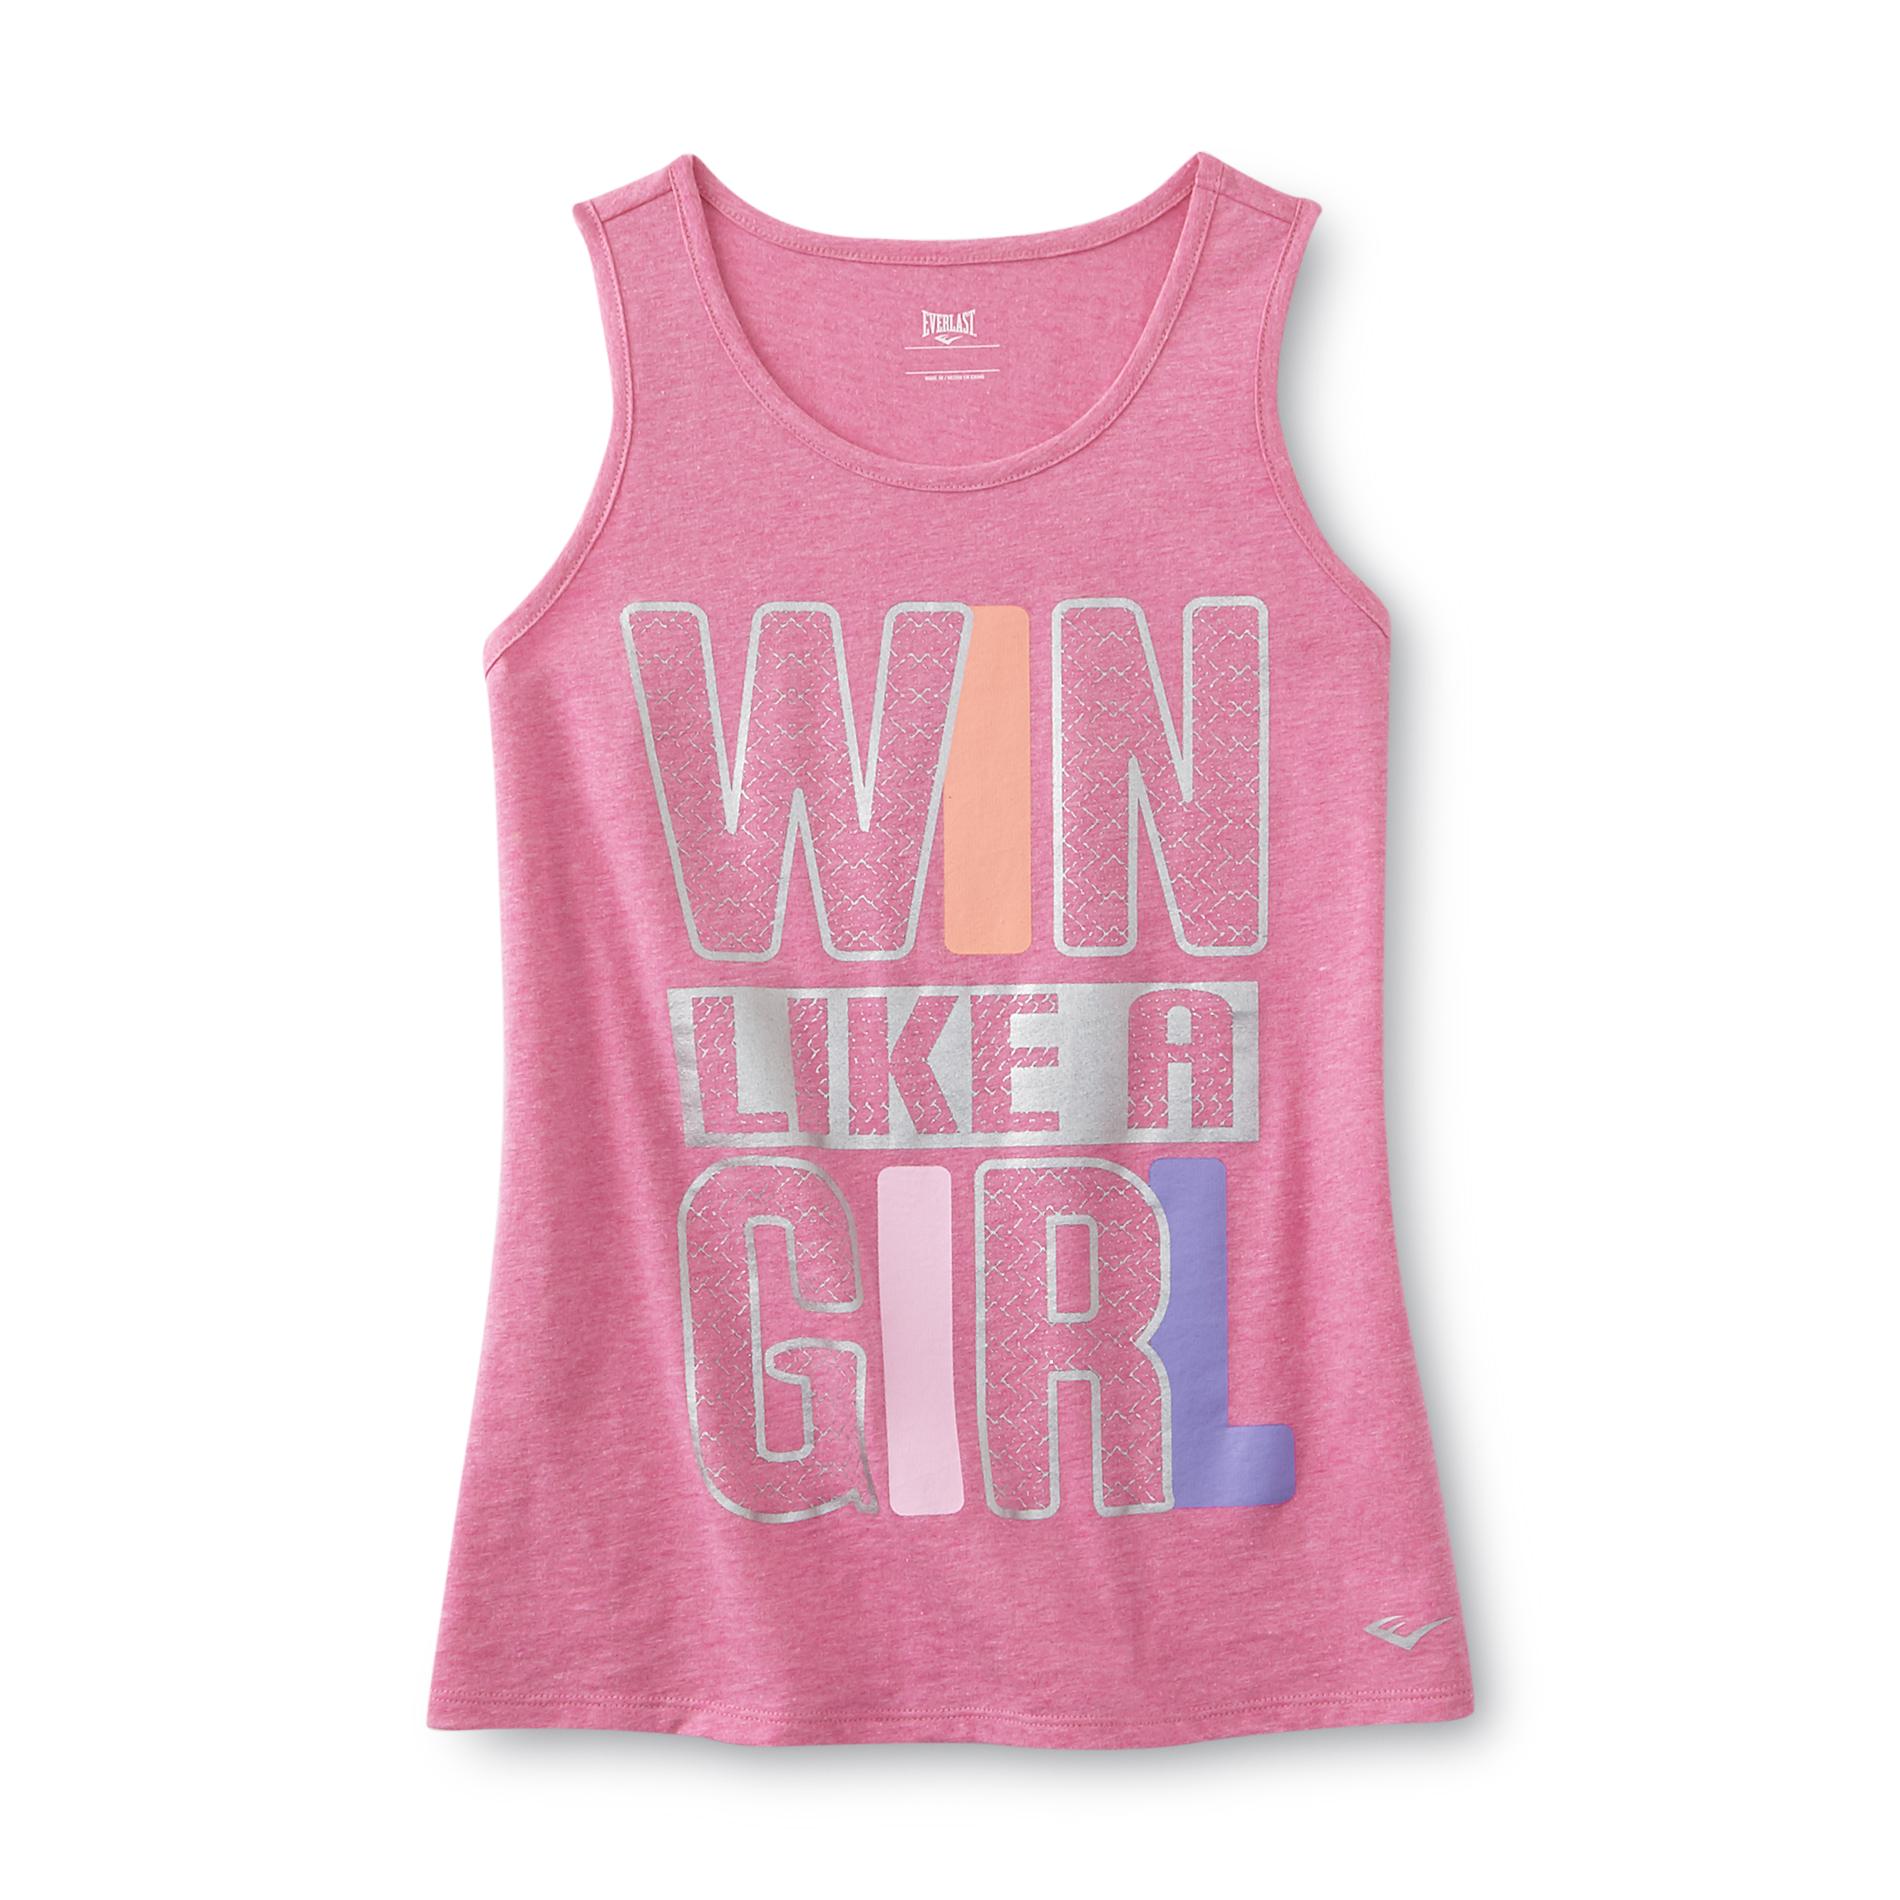 Girl's Graphic Tank Top - Win Like a Girl